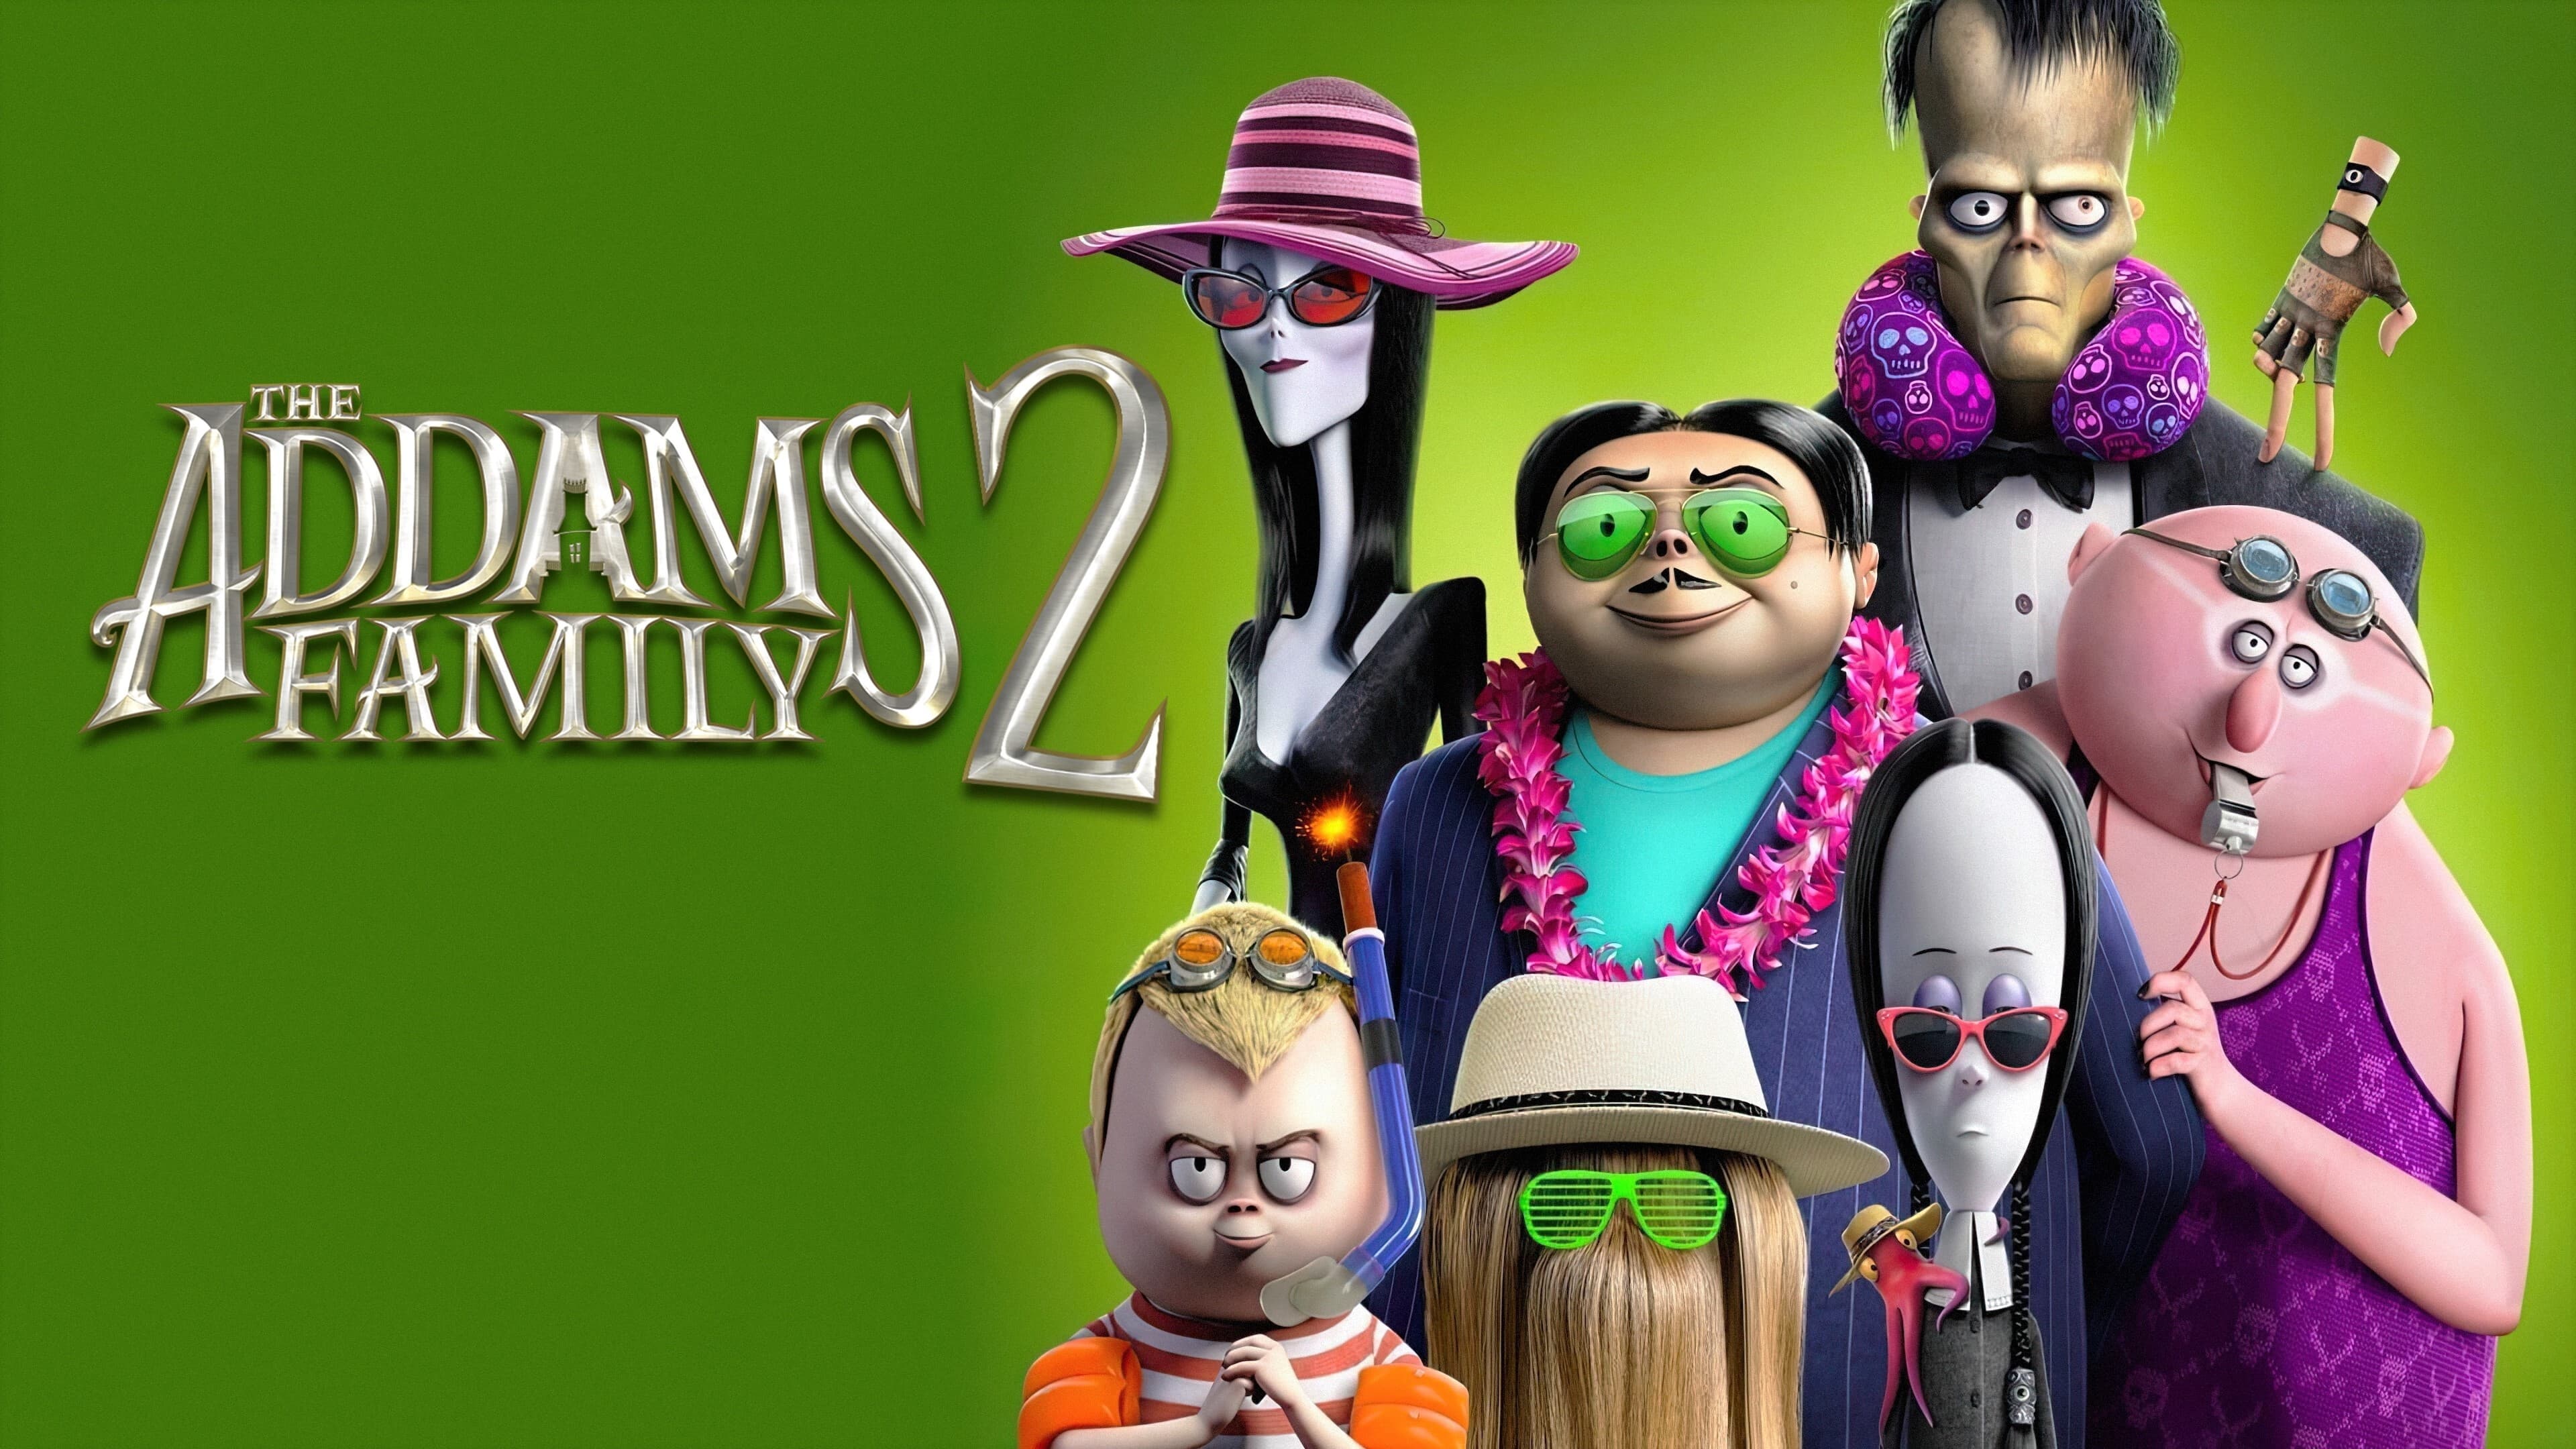 Addamsova rodina 2 (2021)